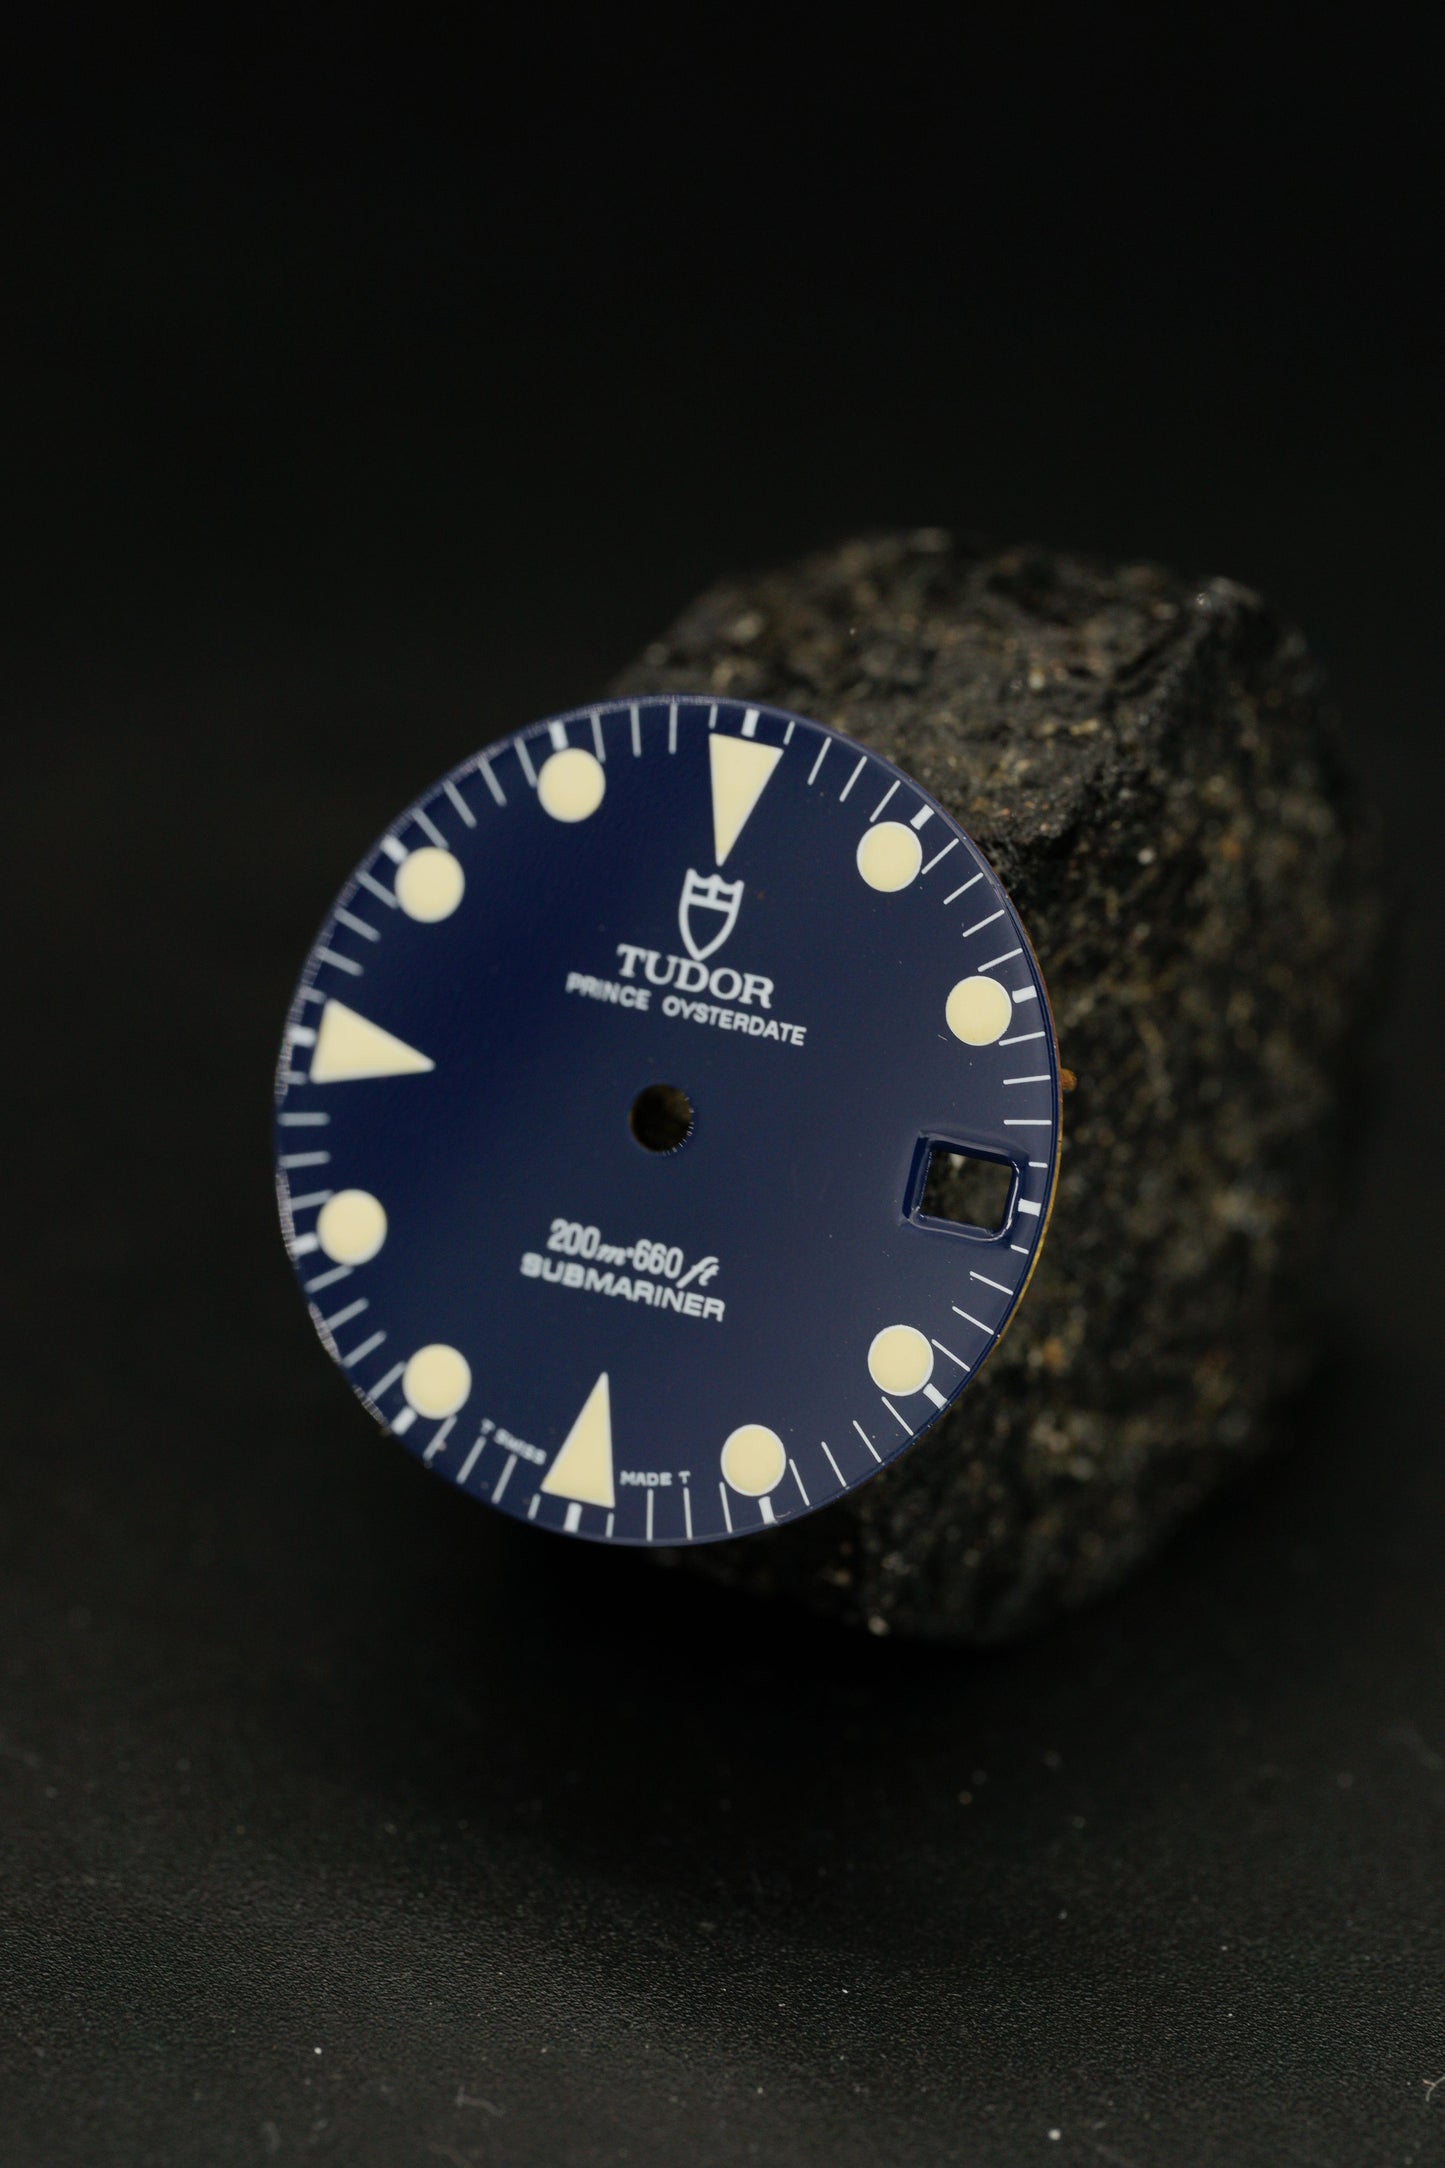 Tudor gloss blue dial for Submariner 79090 tritium